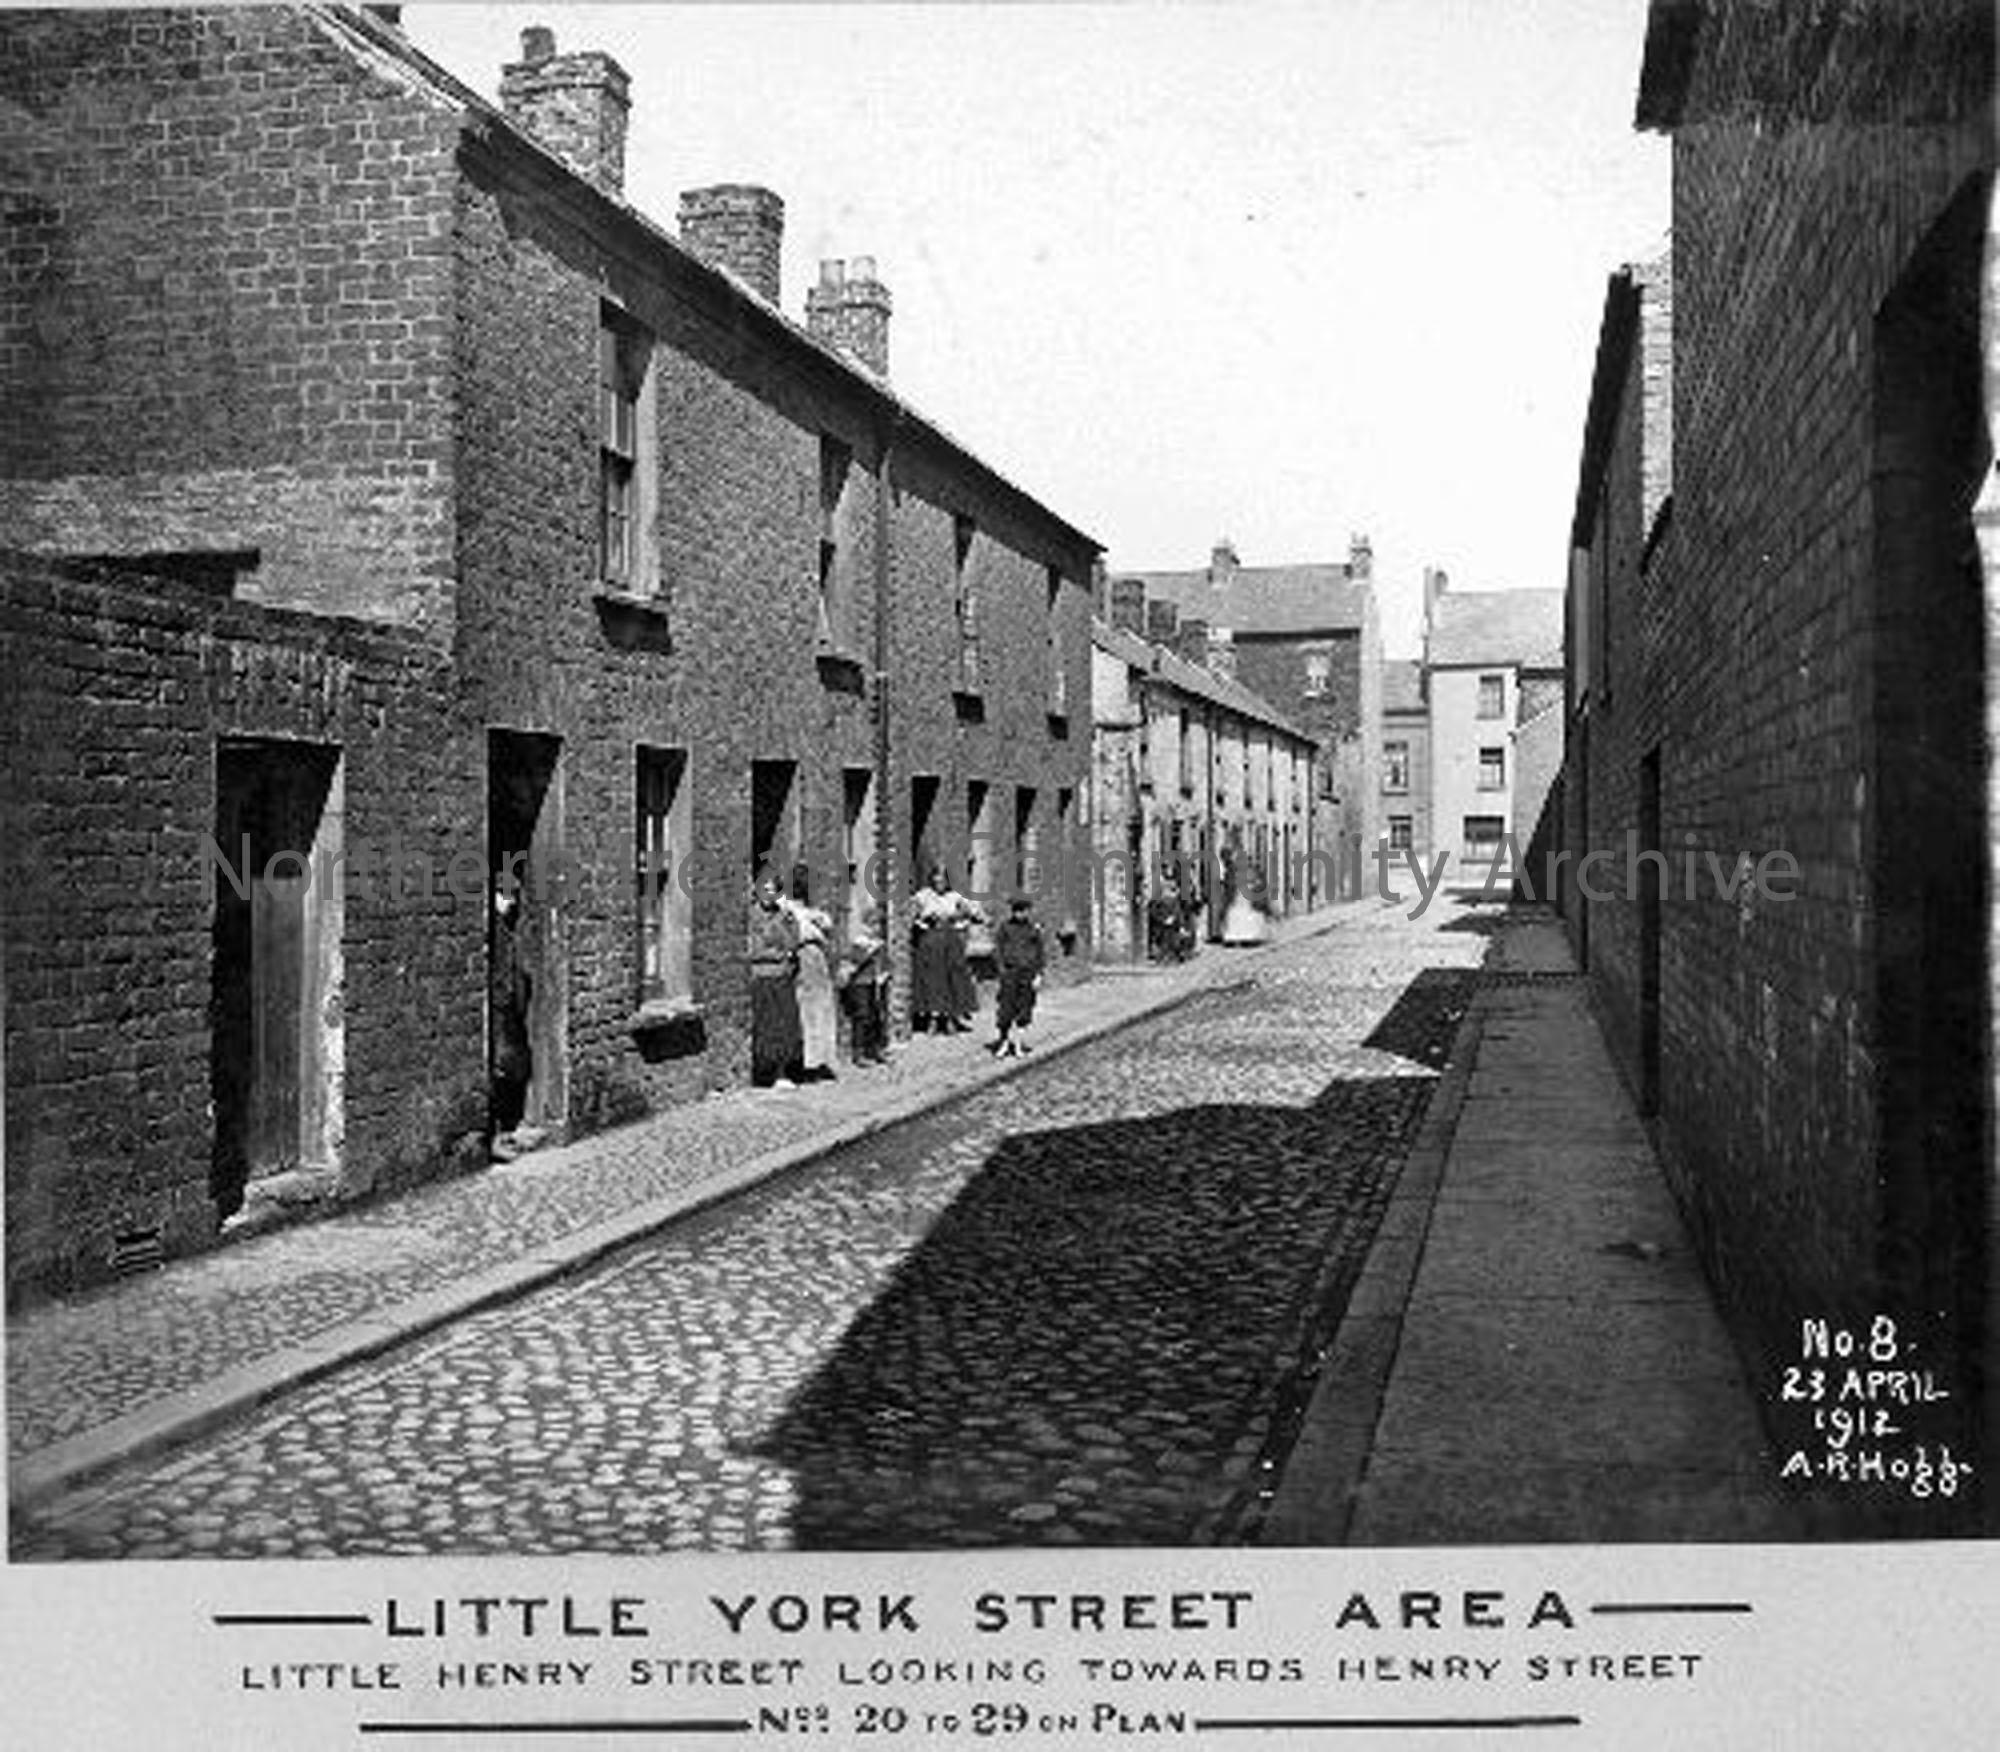 Little York Street Area – Little Henry Street (6184)